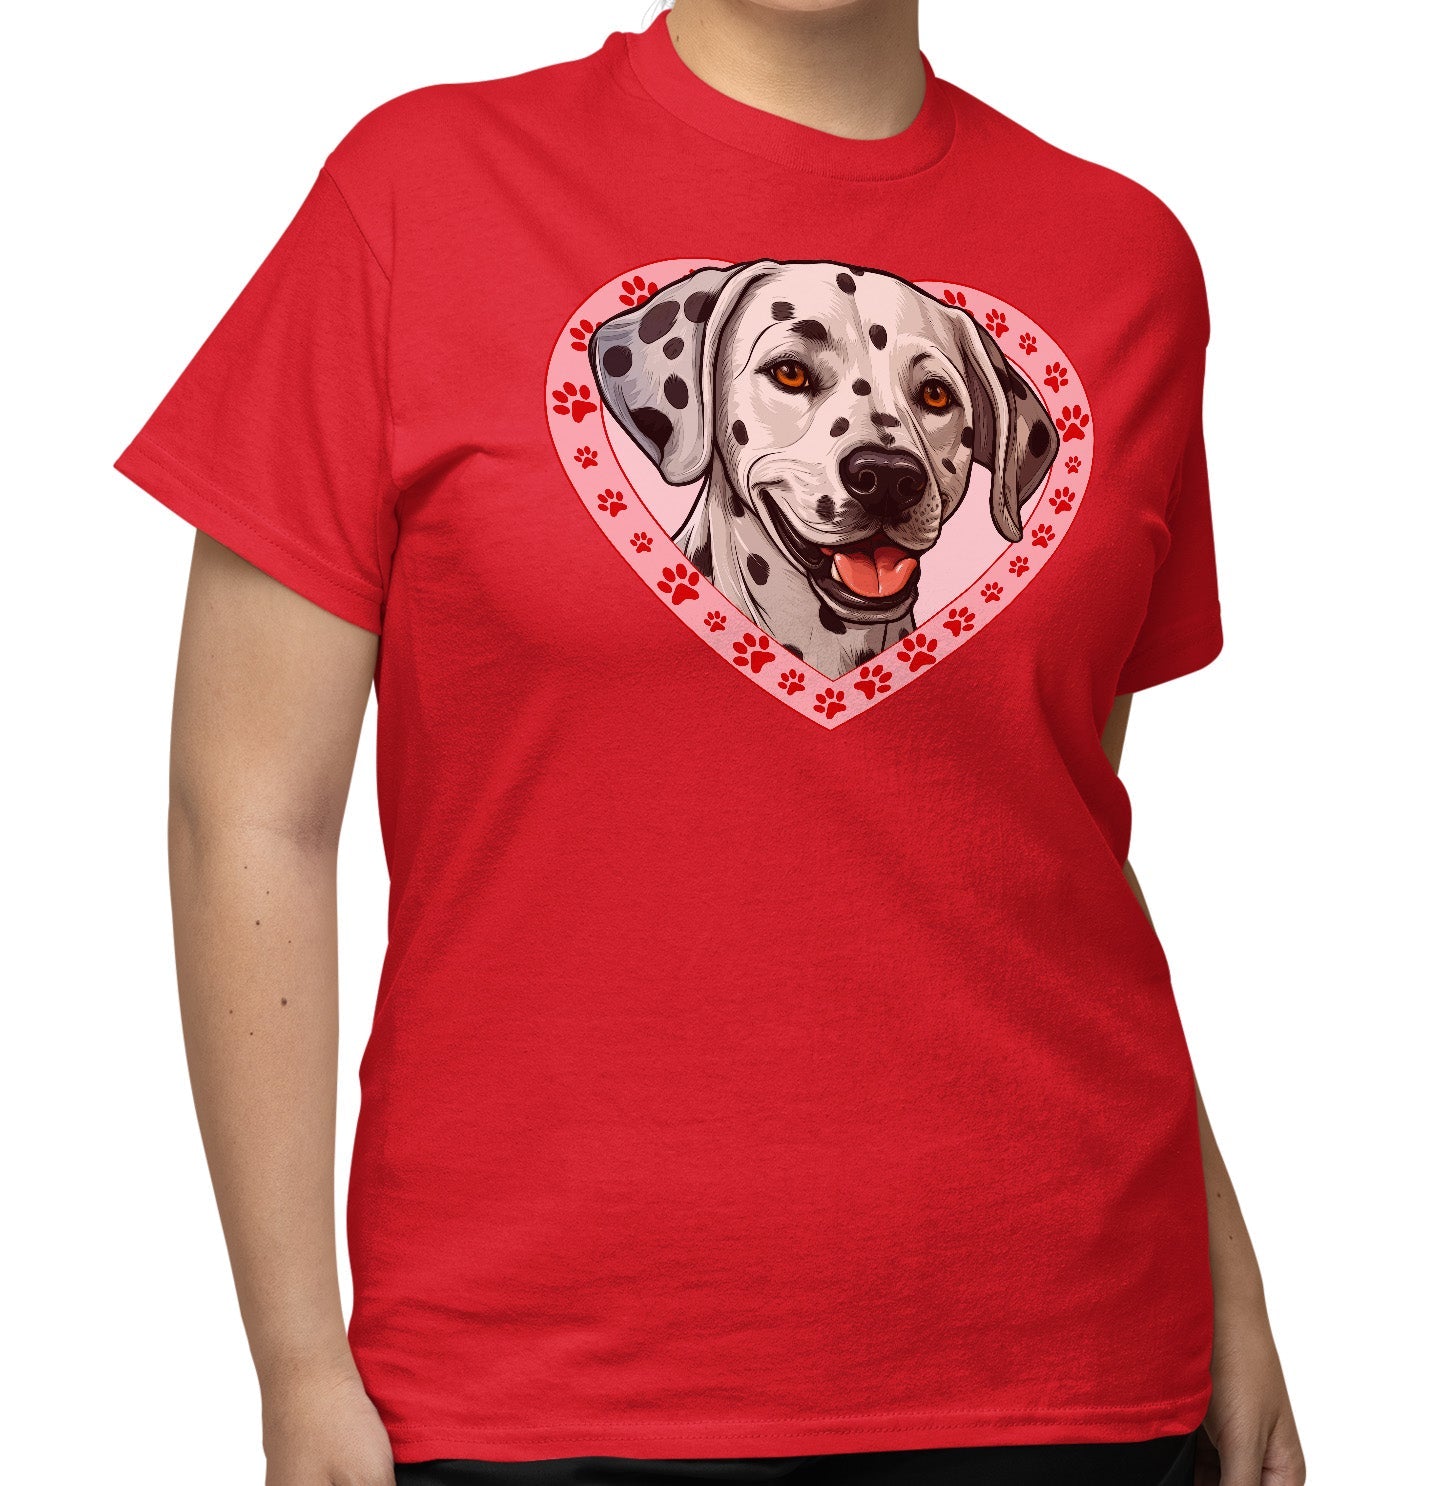 Dalmatian Illustration In Heart - Adult Unisex T-Shirt